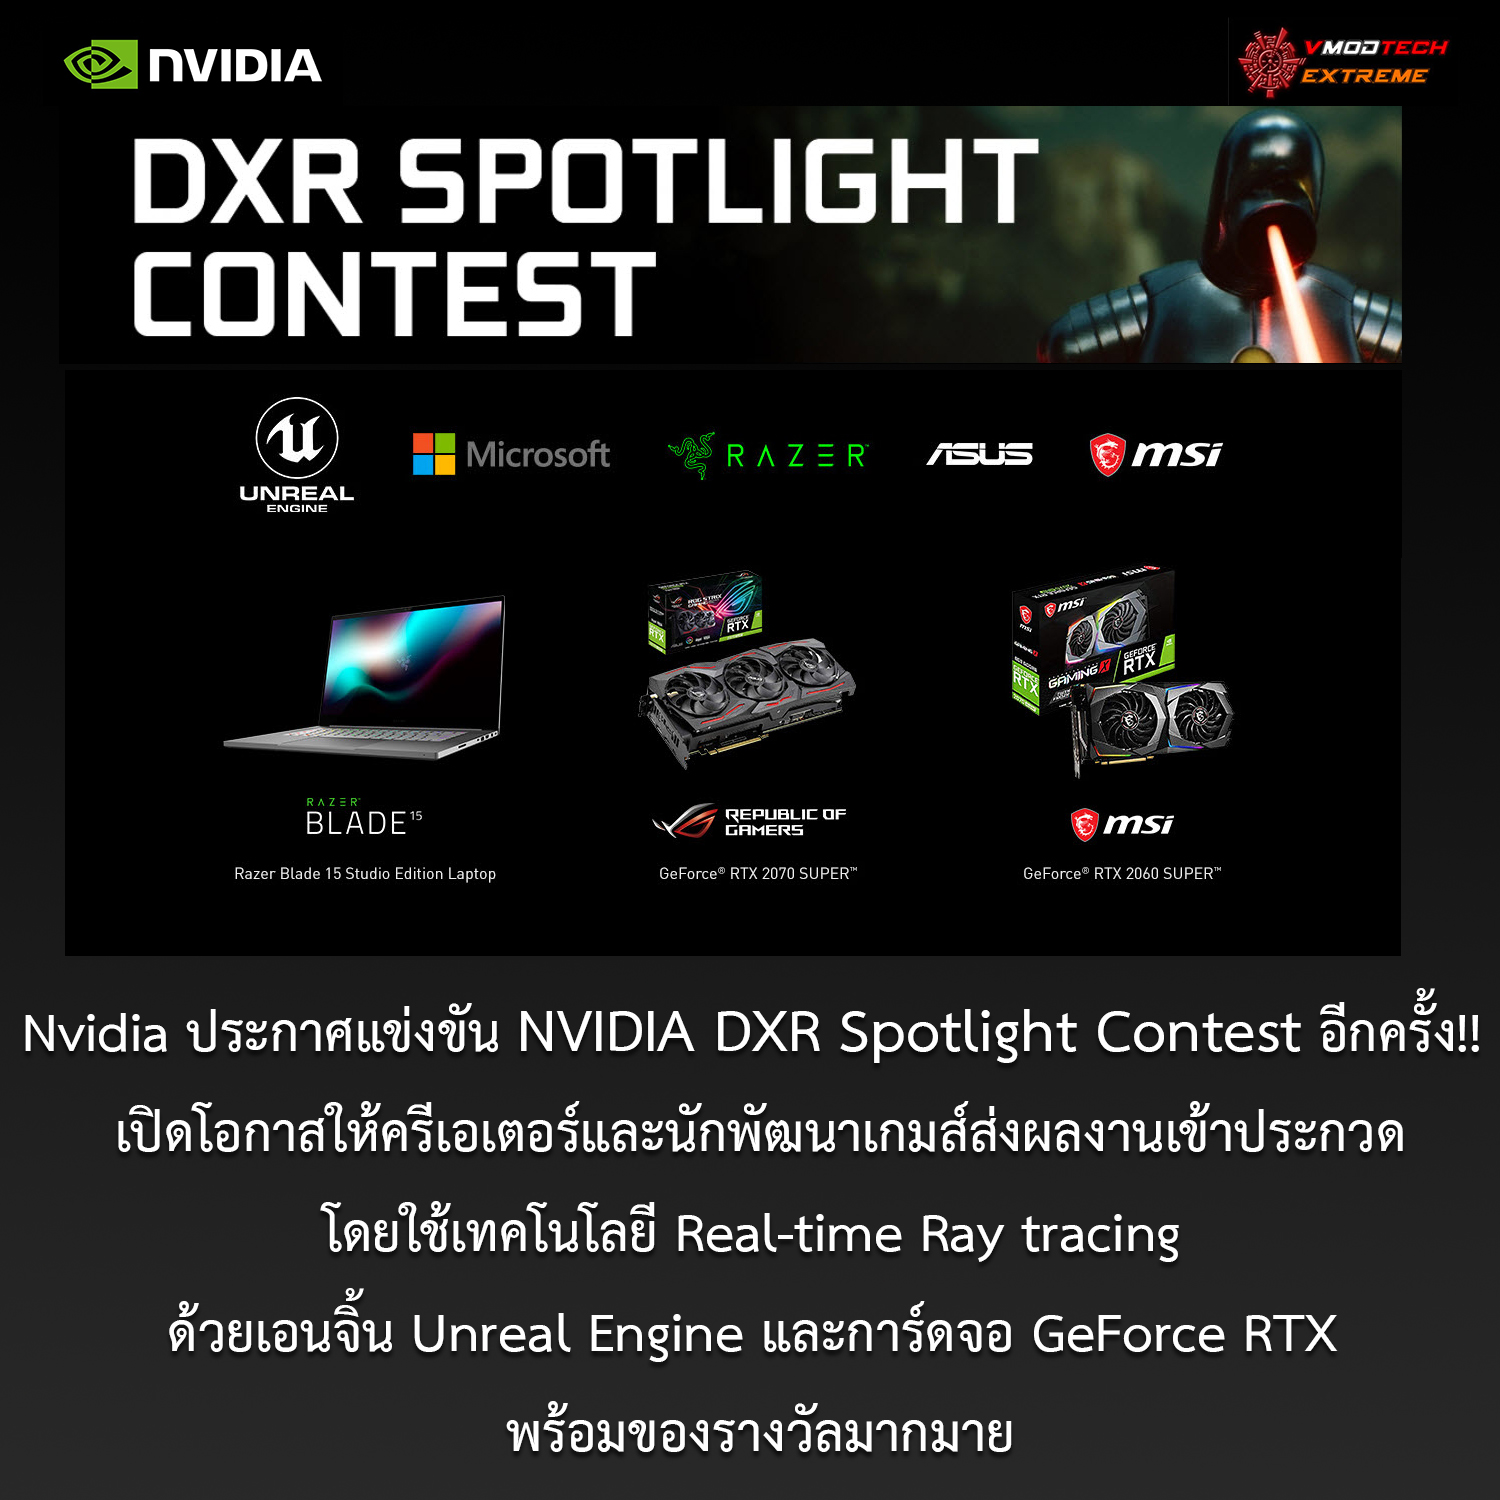 nvidia dxr spotlight contest Nvidia ประกาศแข่งขัน NVIDIA DXR Spotlight Contest อีกครั้ง!! เปิดโอกาสให้ครีเอเตอร์และนักพัฒนาเกมส์ส่งผลงานเข้าร่วมประกวดเทคโนโลยี Real time Ray tracing ด้วยเอนจิ้น Unreal Engine และการ์ดจอ GeForce RTX พร้อมของรางวัลมากมาย 